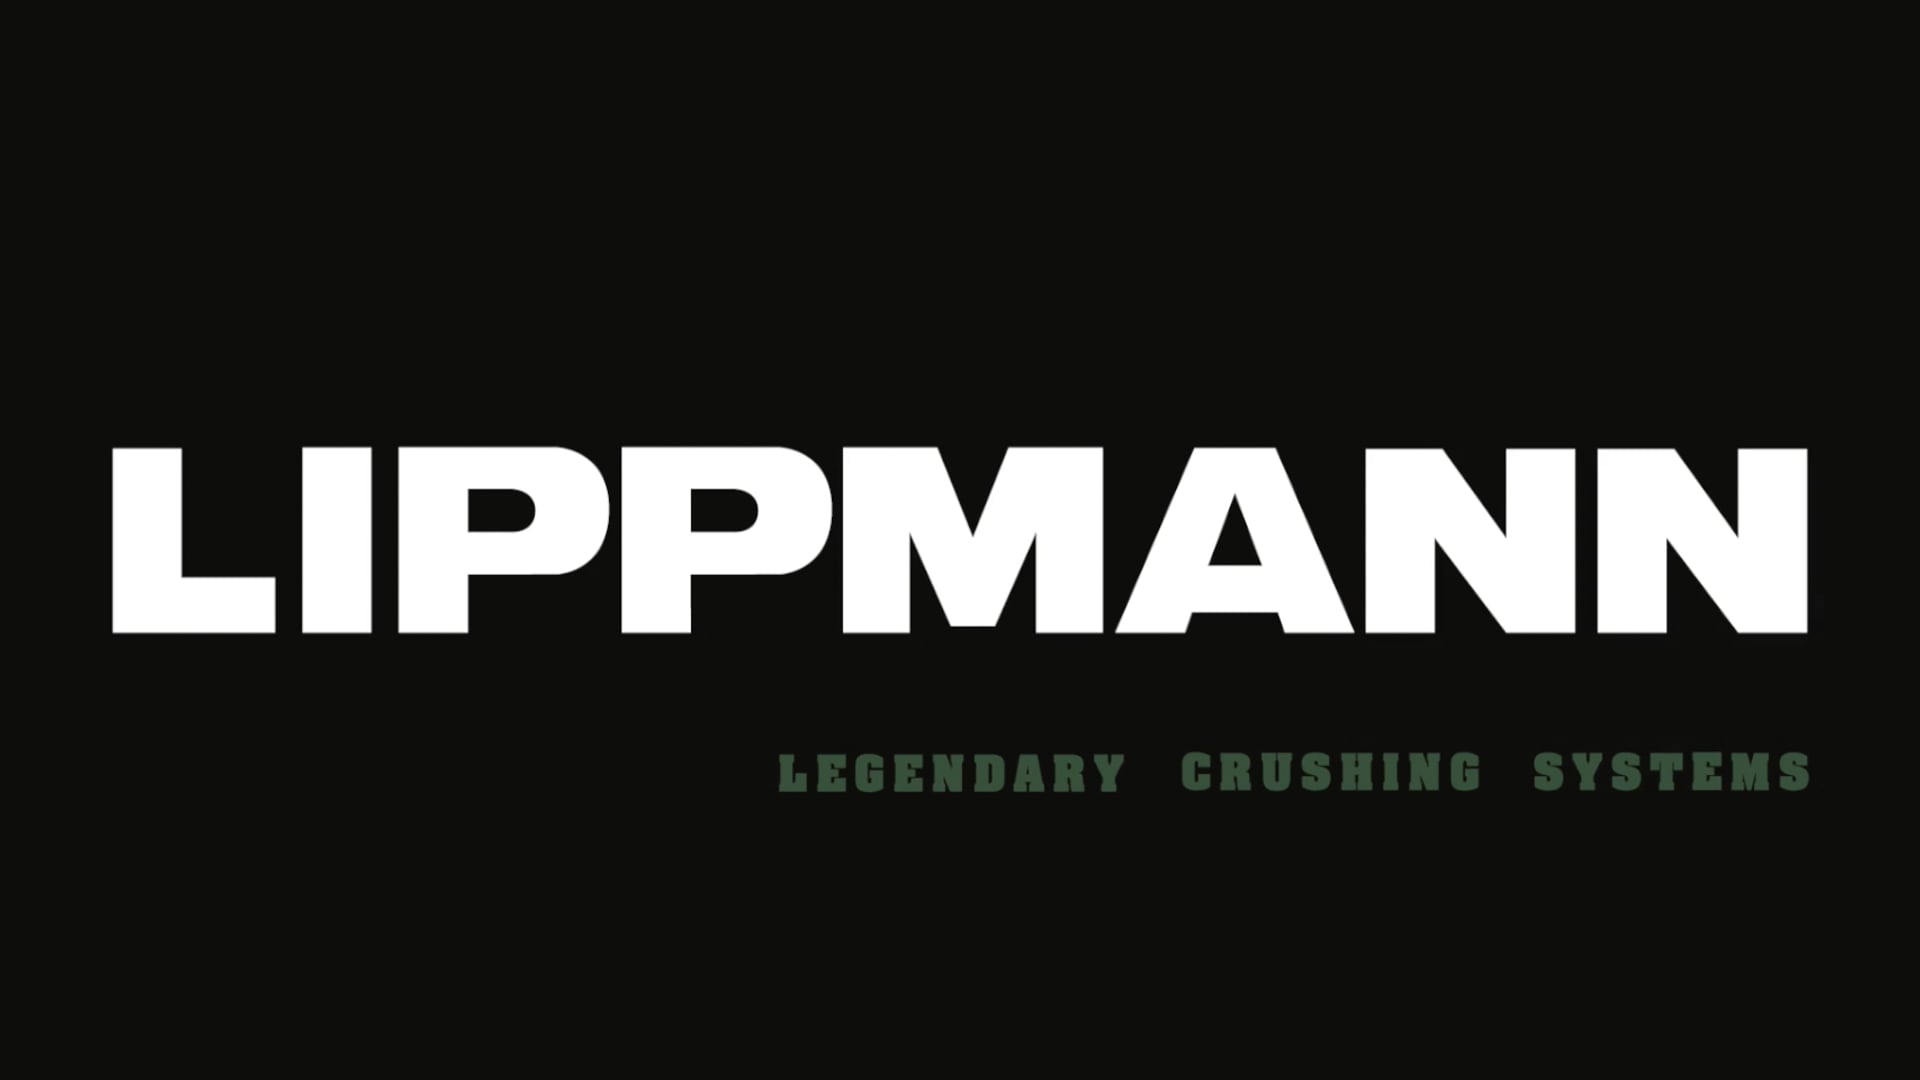 Lippmann - LEGENDARY CRUSHING SYSTEMS